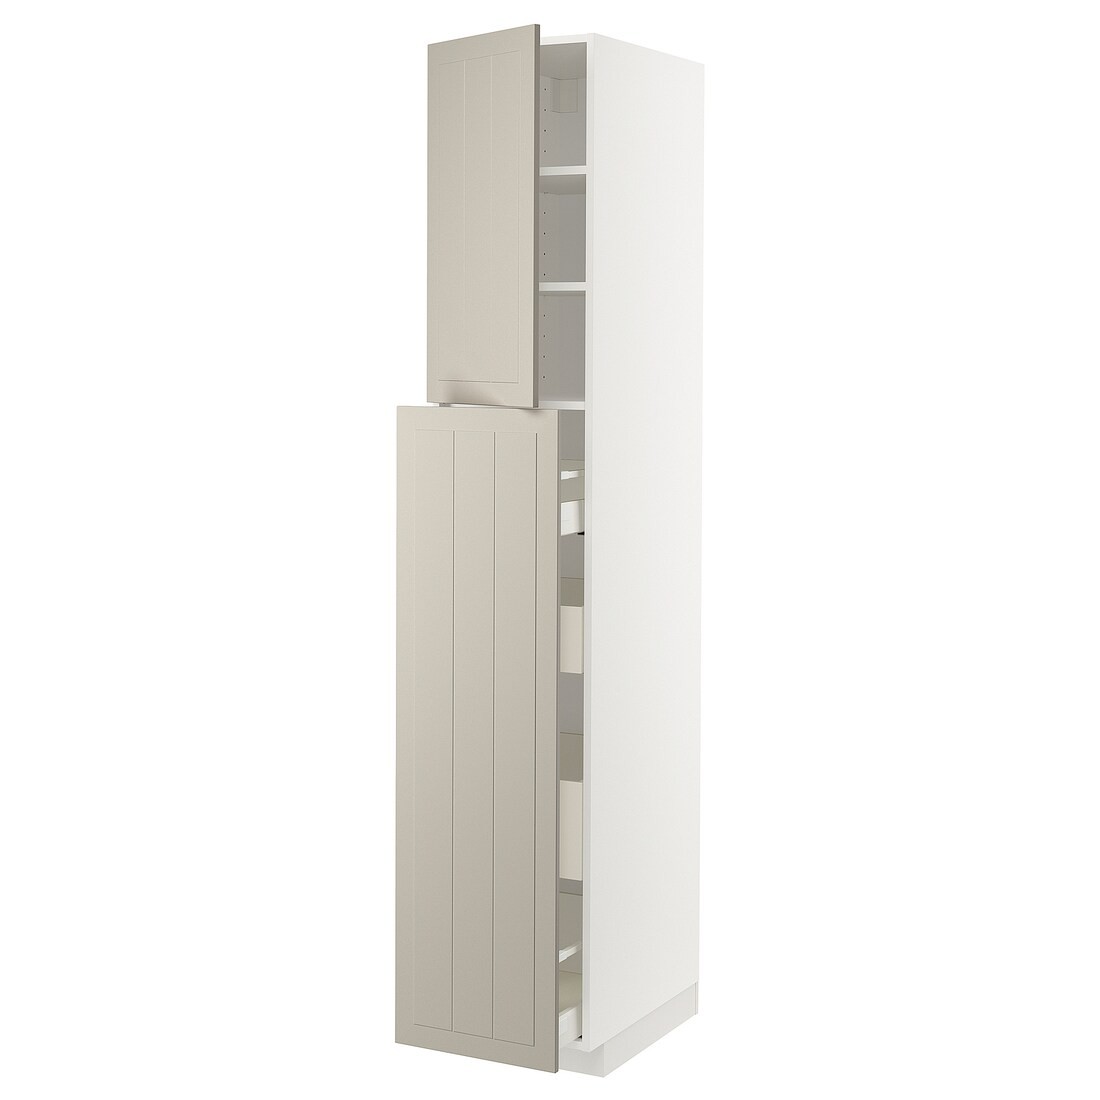 IKEA METOD МЕТОД / MAXIMERA МАКСИМЕРА Высокий шкаф полки / ящики, белый / Stensund бежевый, 40x60x220 см 79462494 | 794.624.94